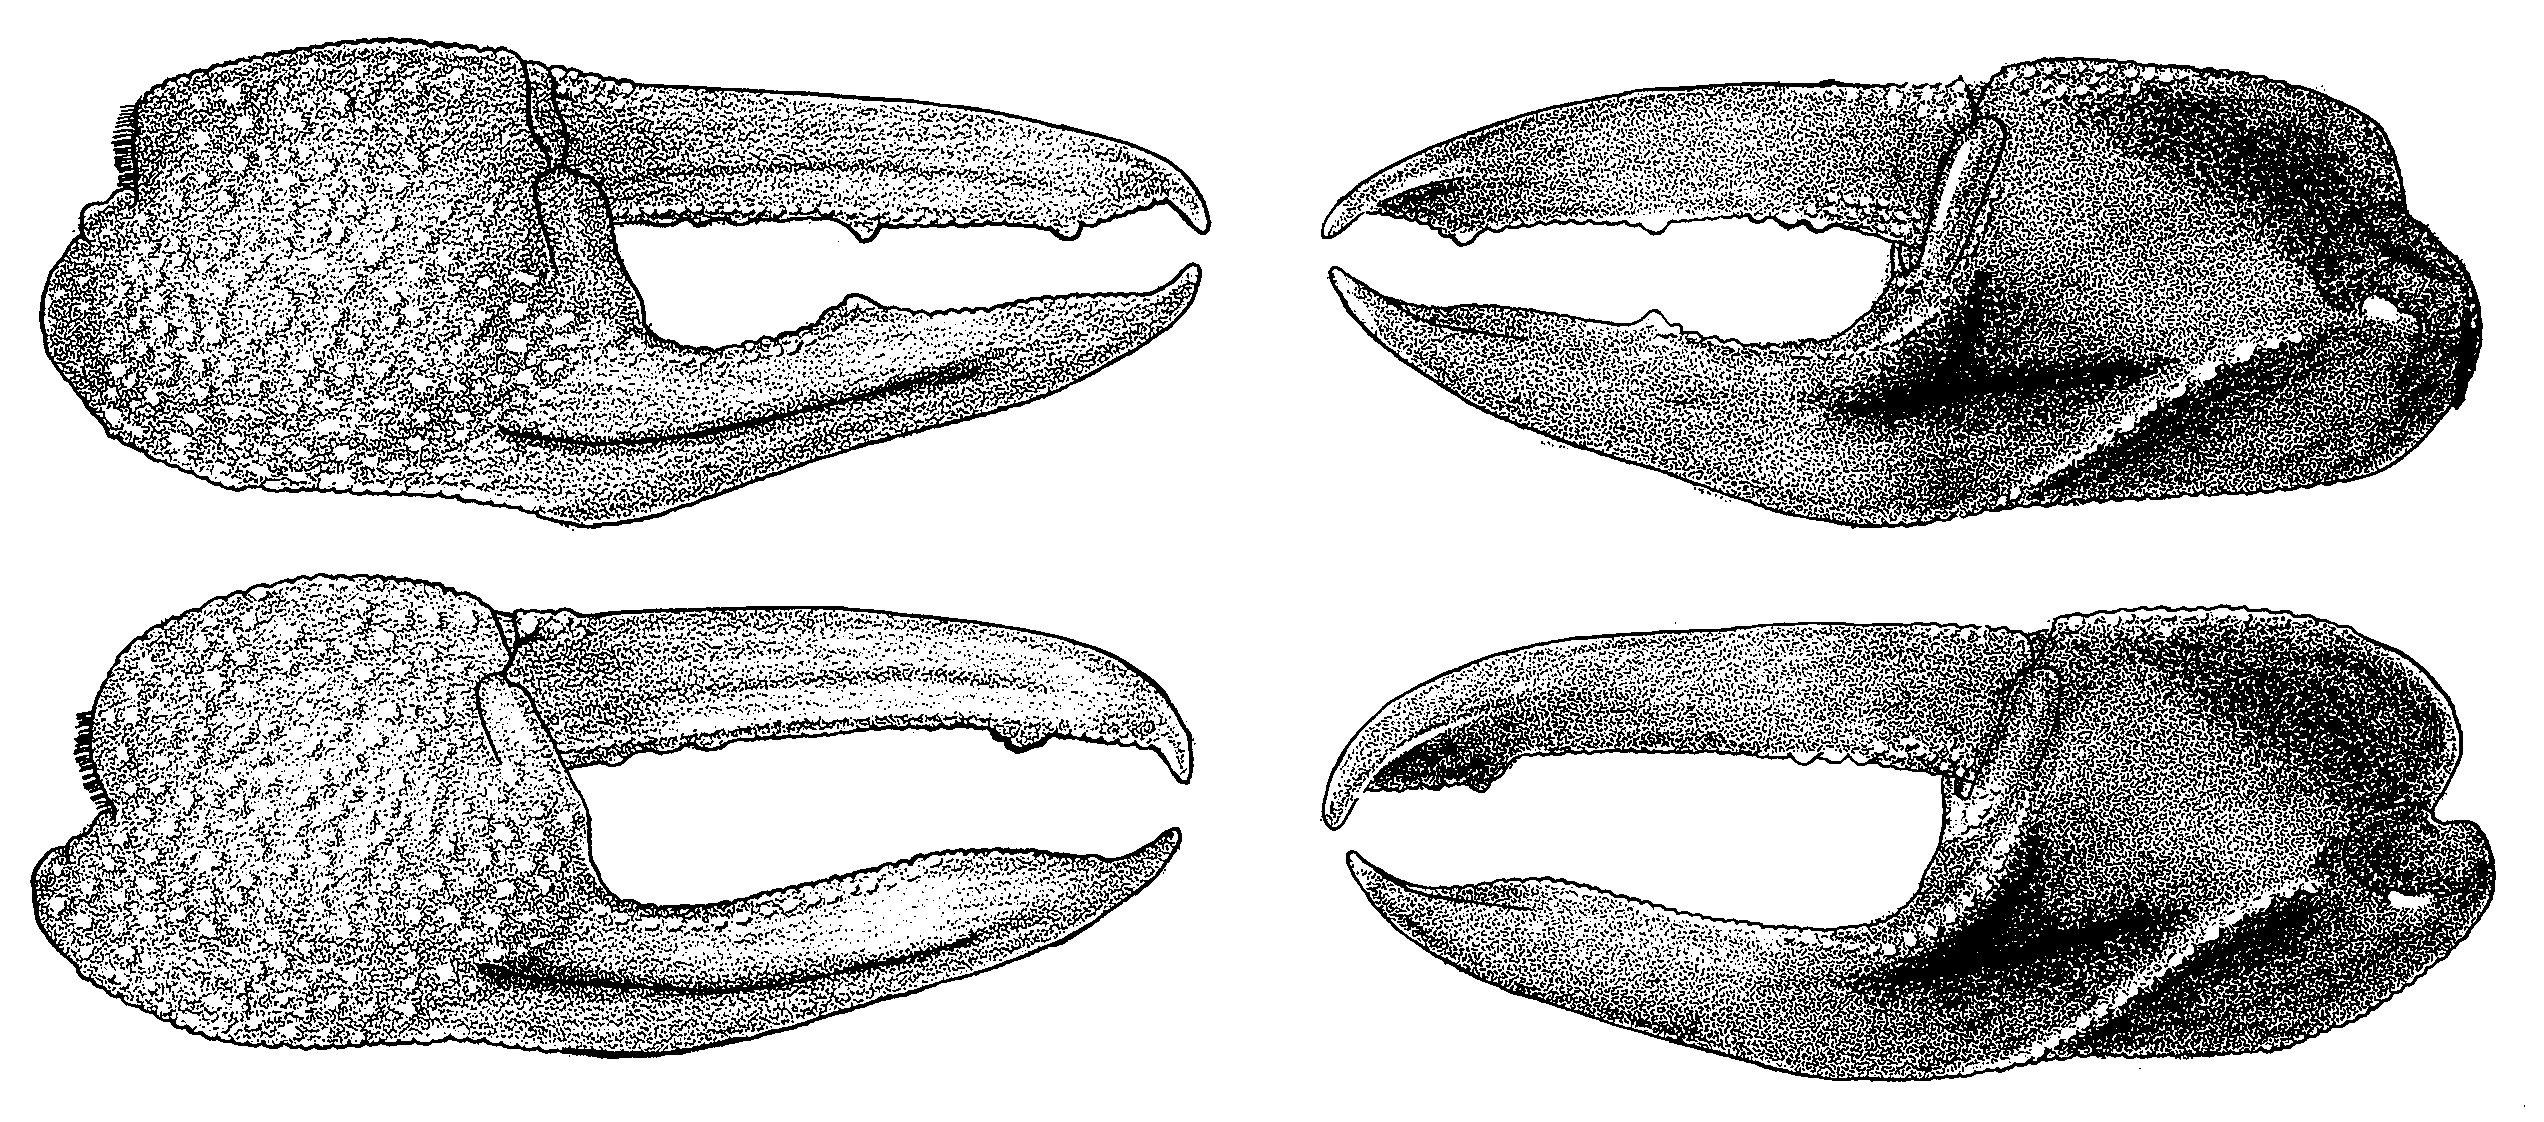 Uca coarctata coarctata: Crane (1975) image